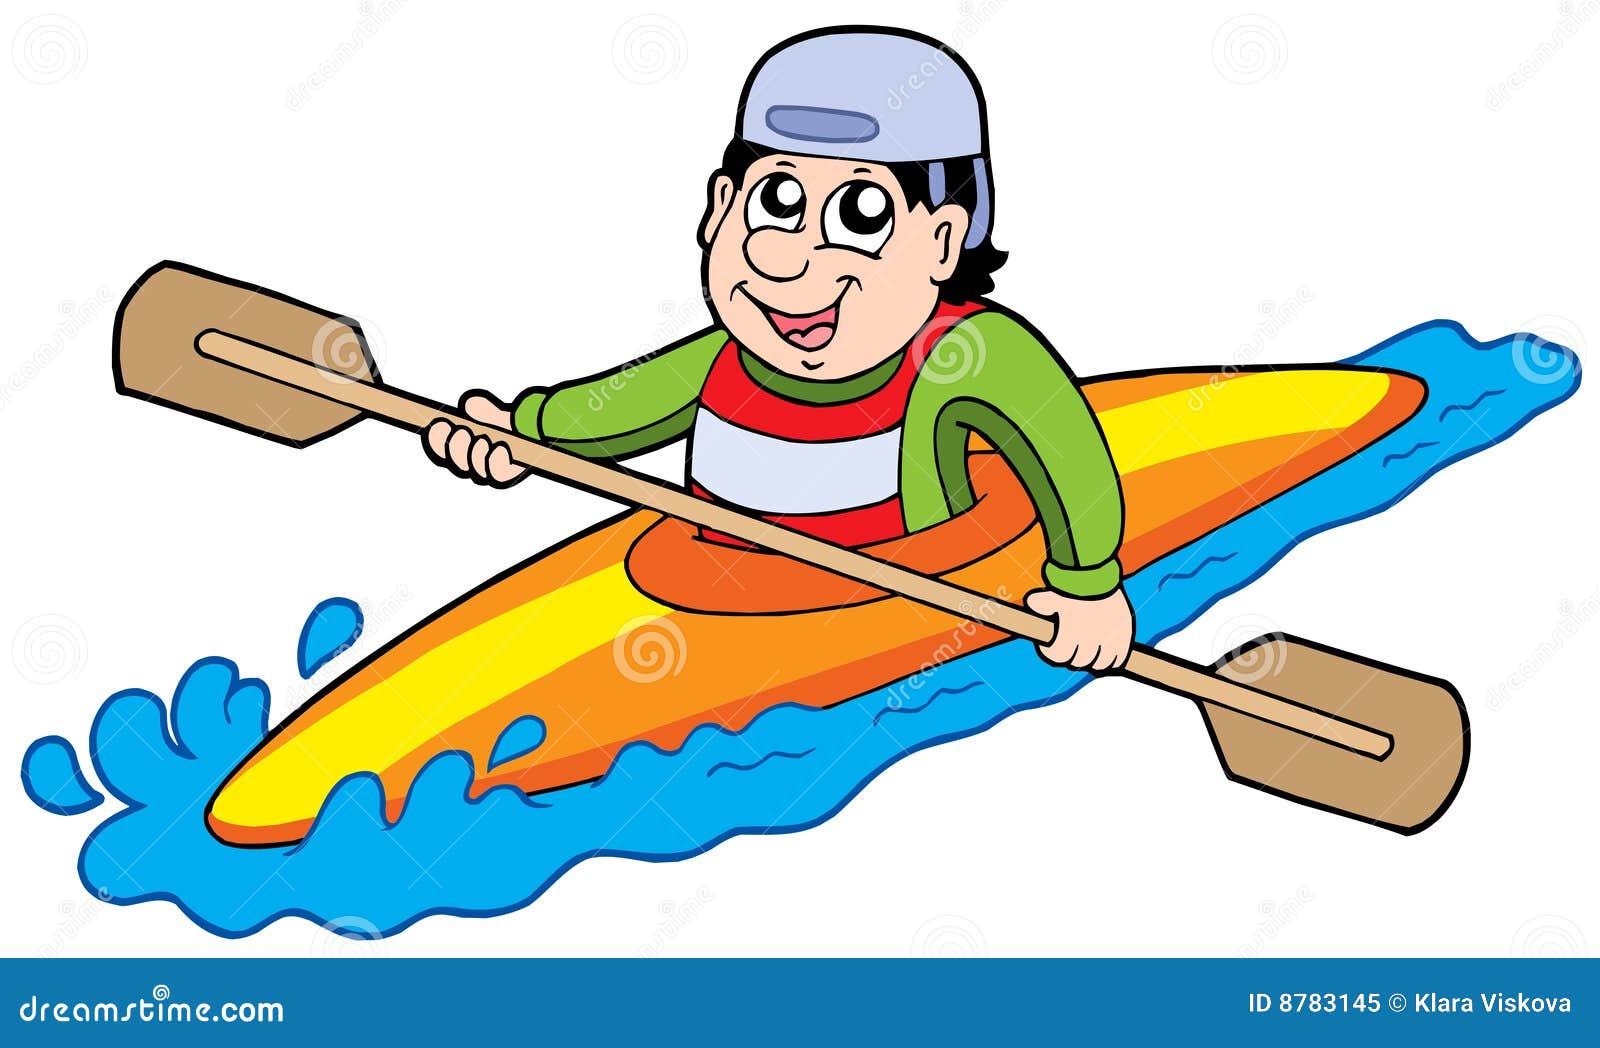 Cartoon kayaker on white background - vector illustration.